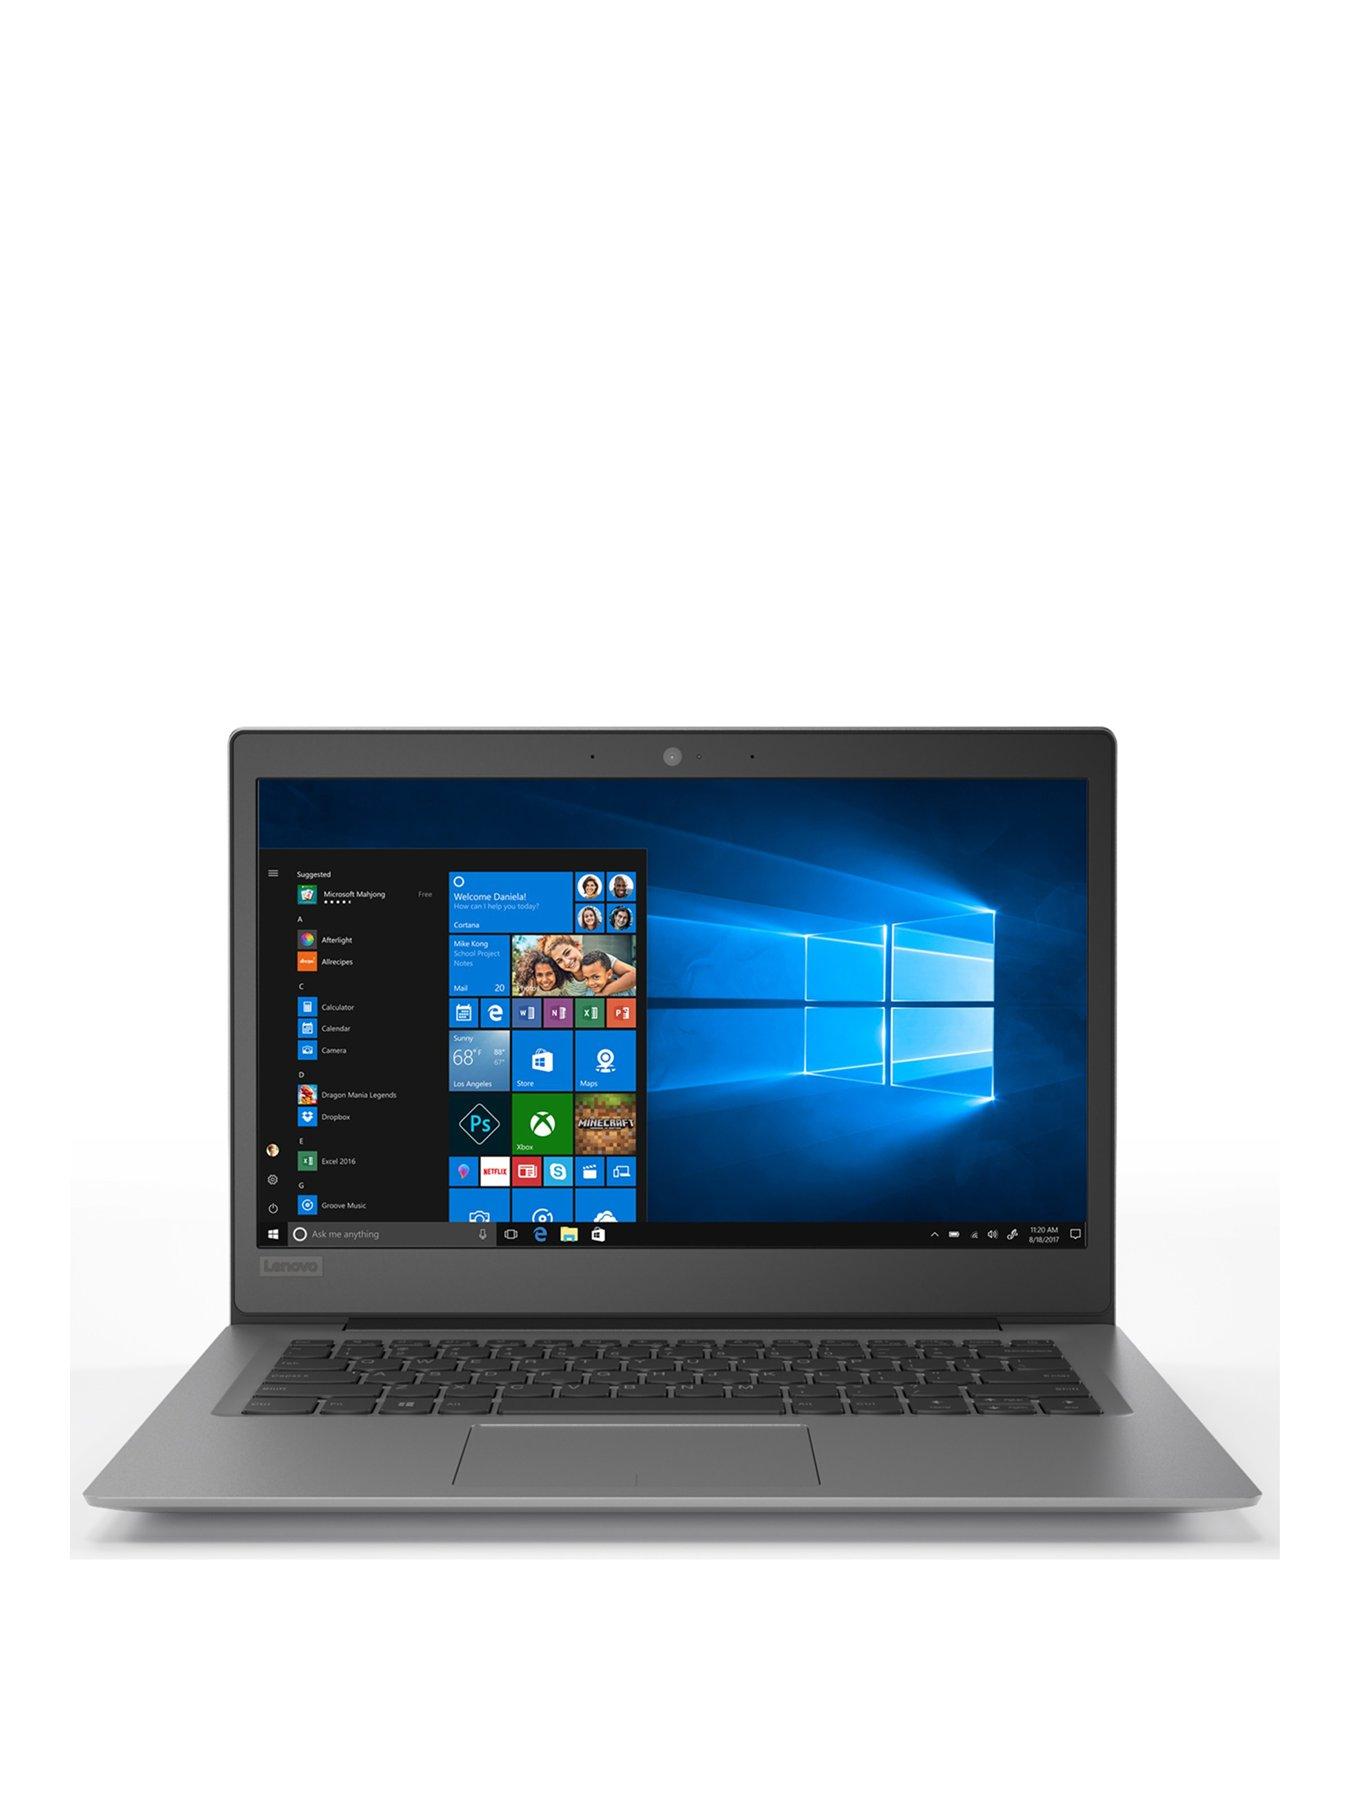 Lenovo Ideapad 120S-14Iap Intel Celeron, 4Gb Ram, 32Gb Storage, 14 Inch Laptop – Laptop With Microsoft Office 365 Home 1 Yr